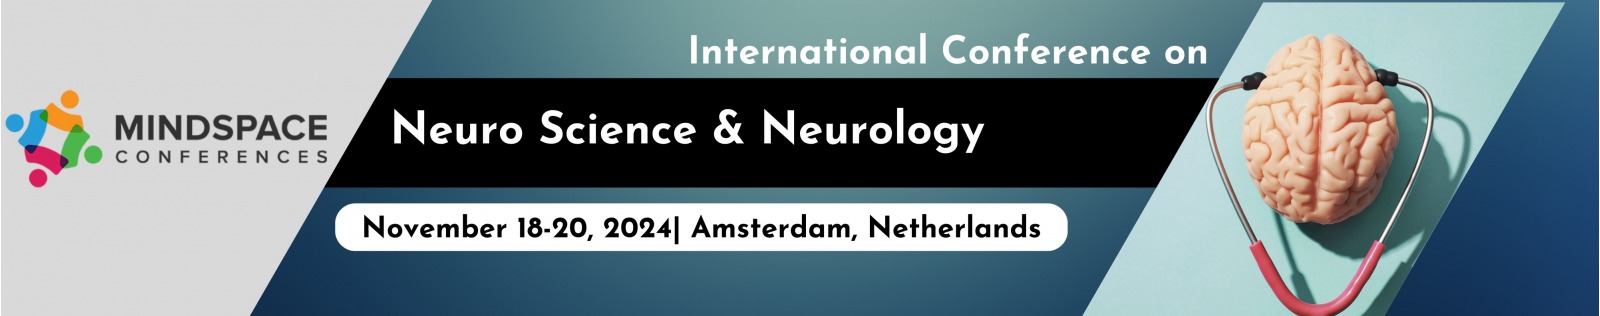 Neuroscience Conference | Mindspace , International Conference on Neuroscience & Neurology